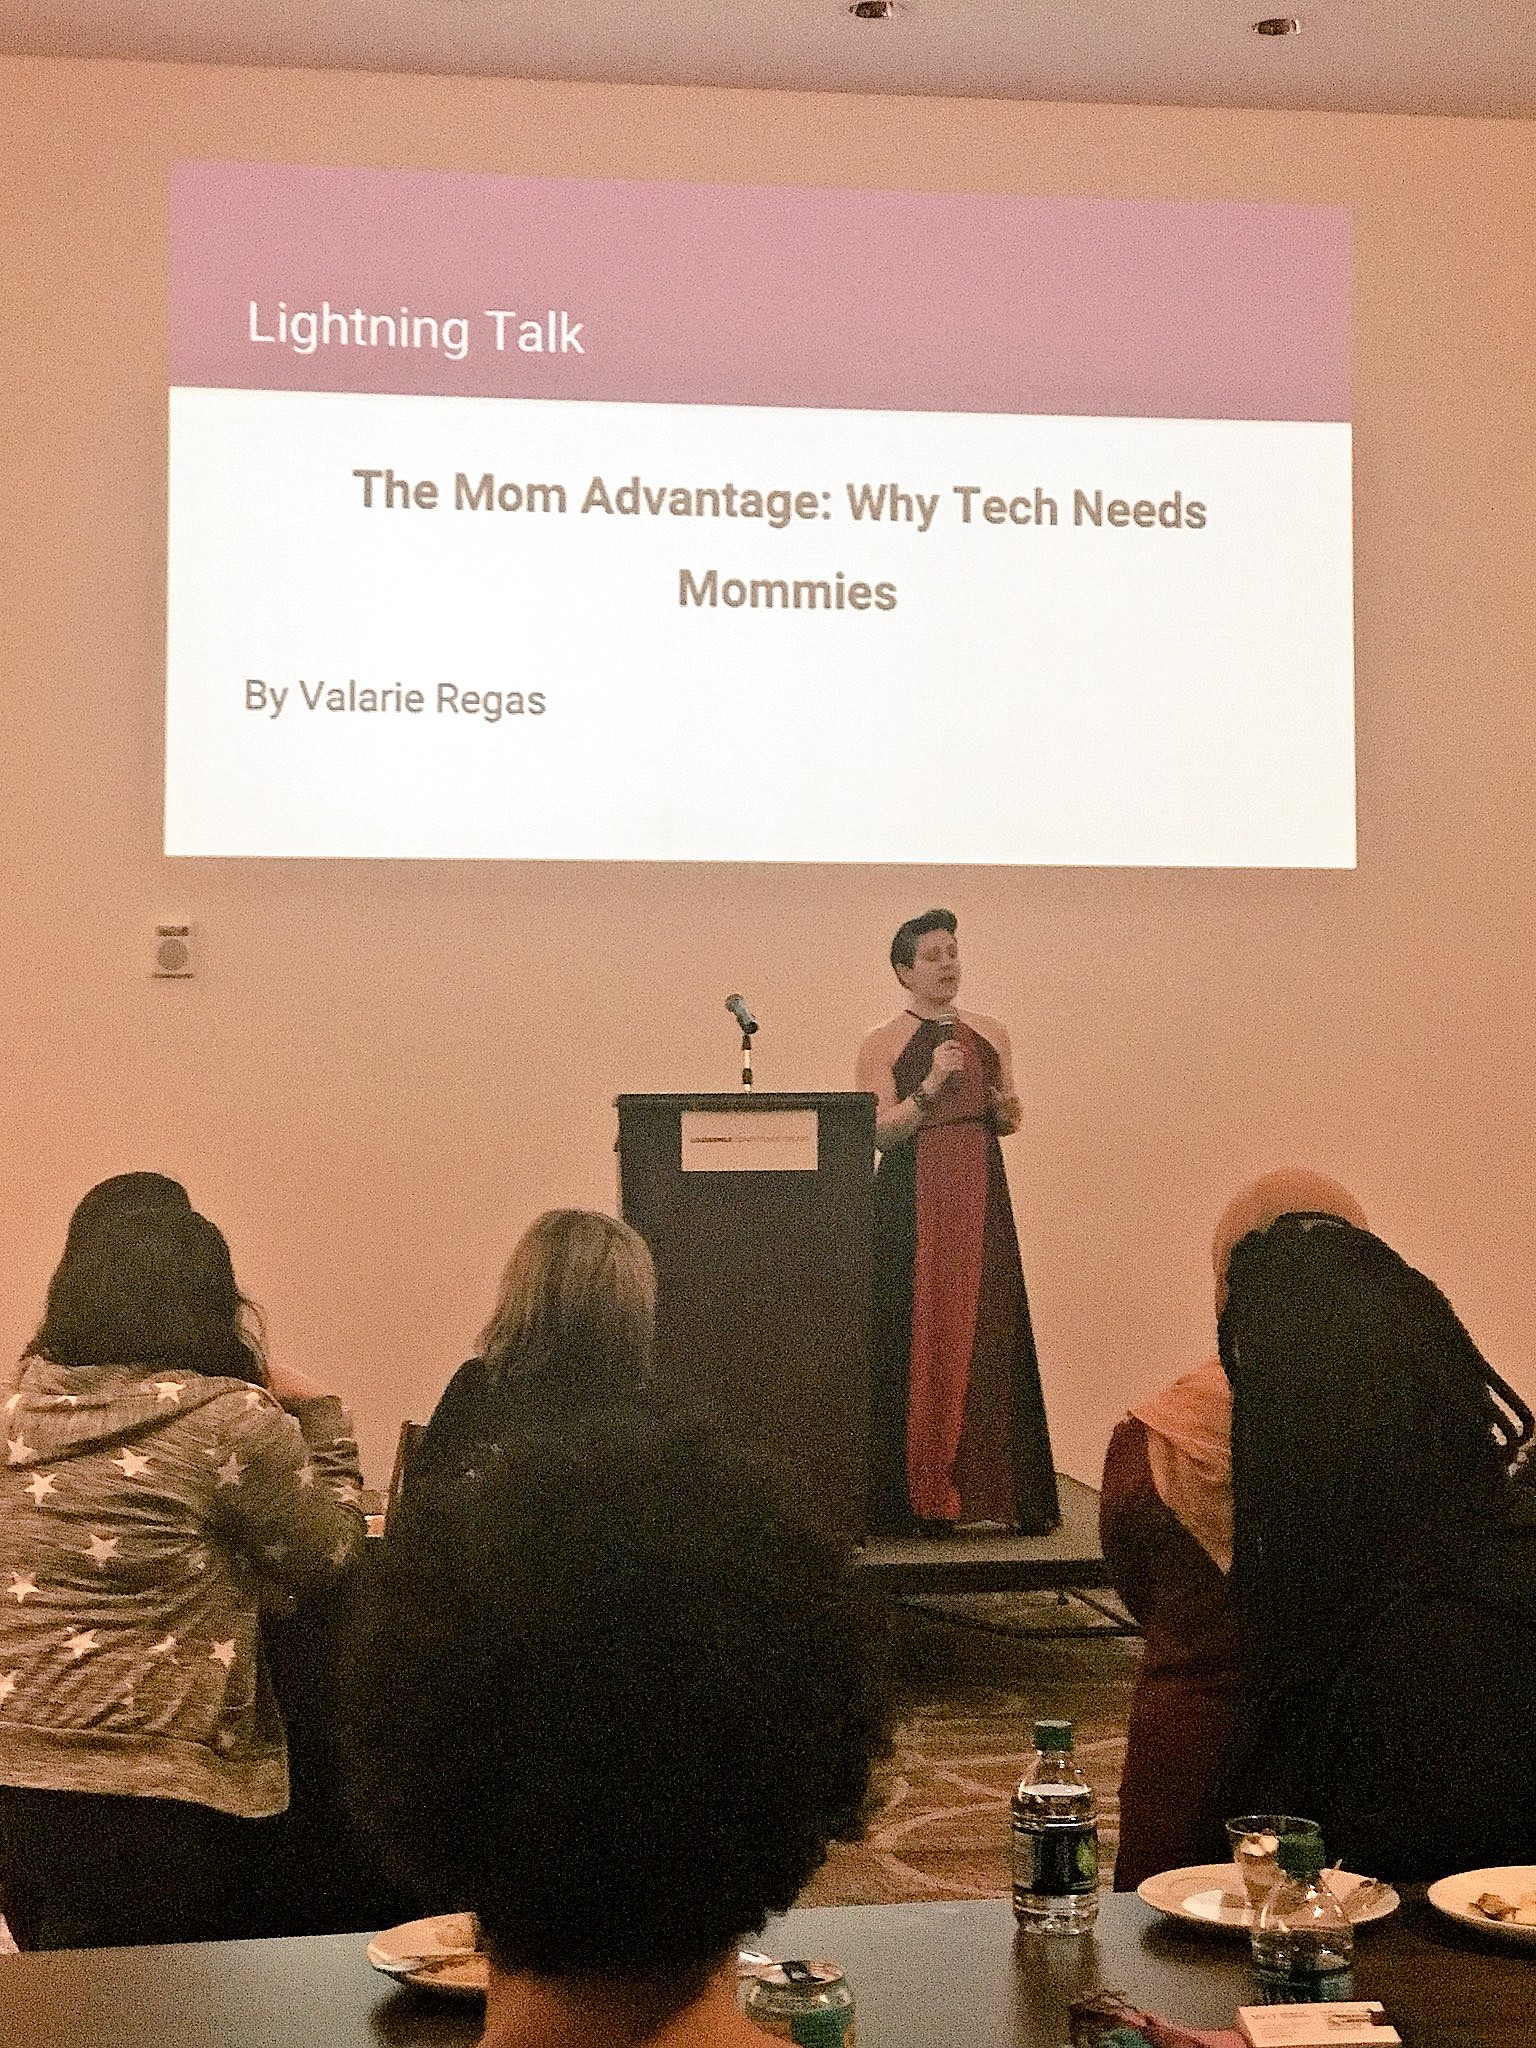 The Mom Advantage: Why Tech Needs Moms